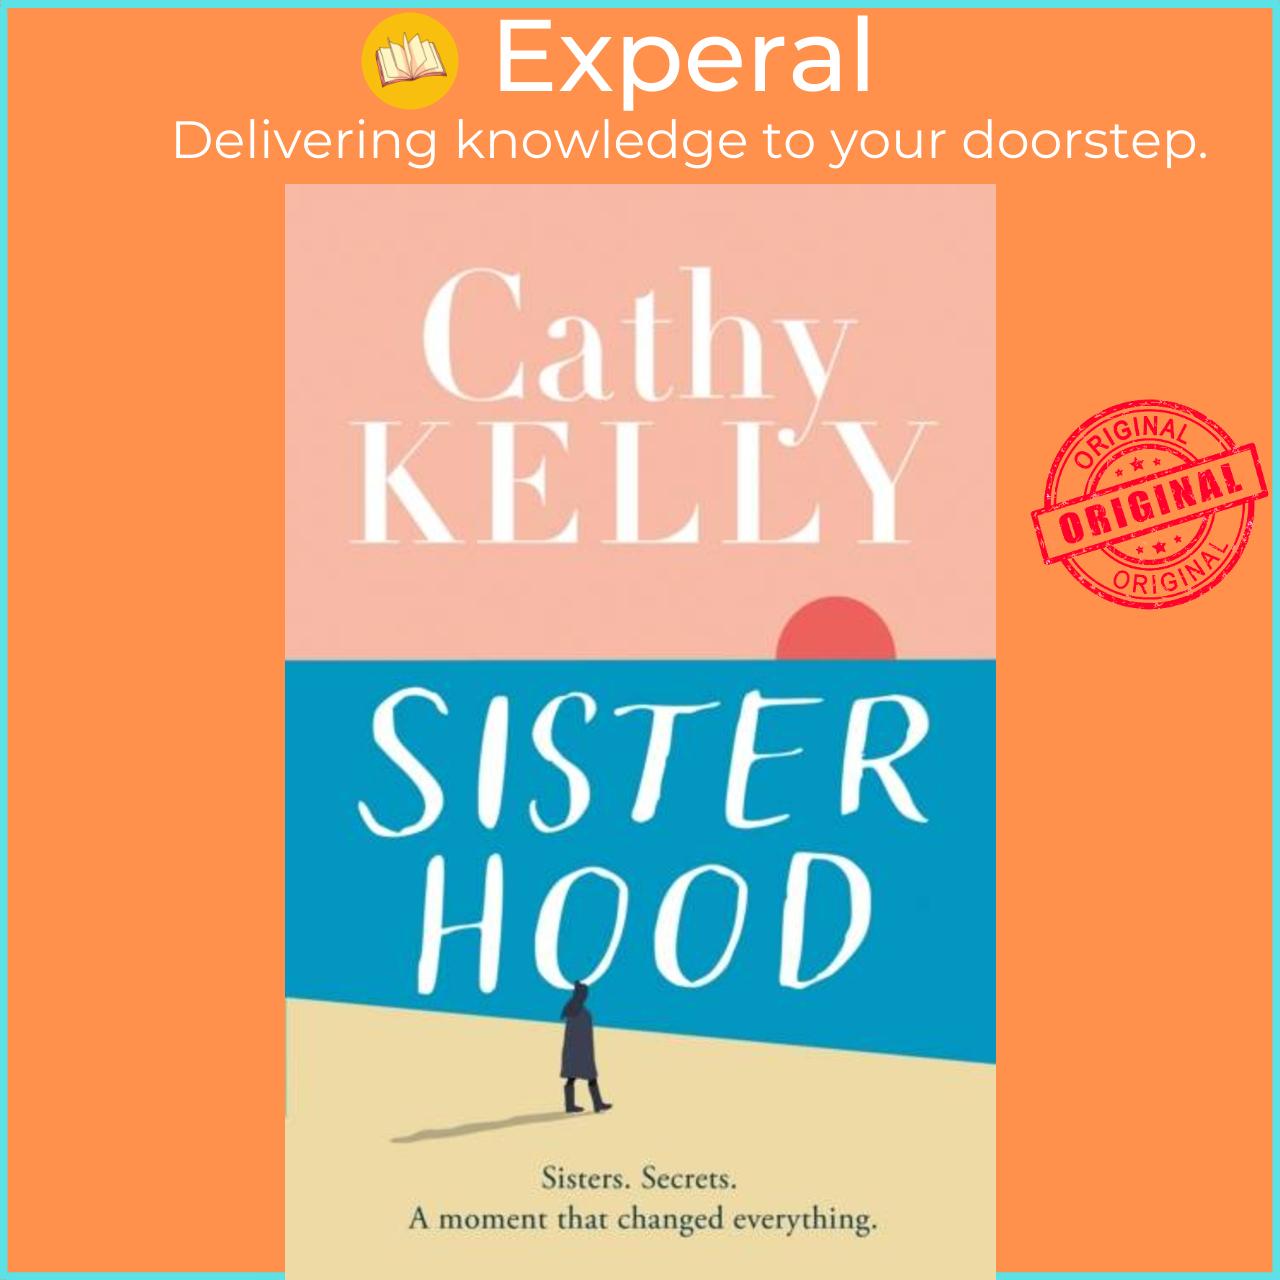 Sách - Sisterhood by Cathy Kelly (UK edition, paperback)